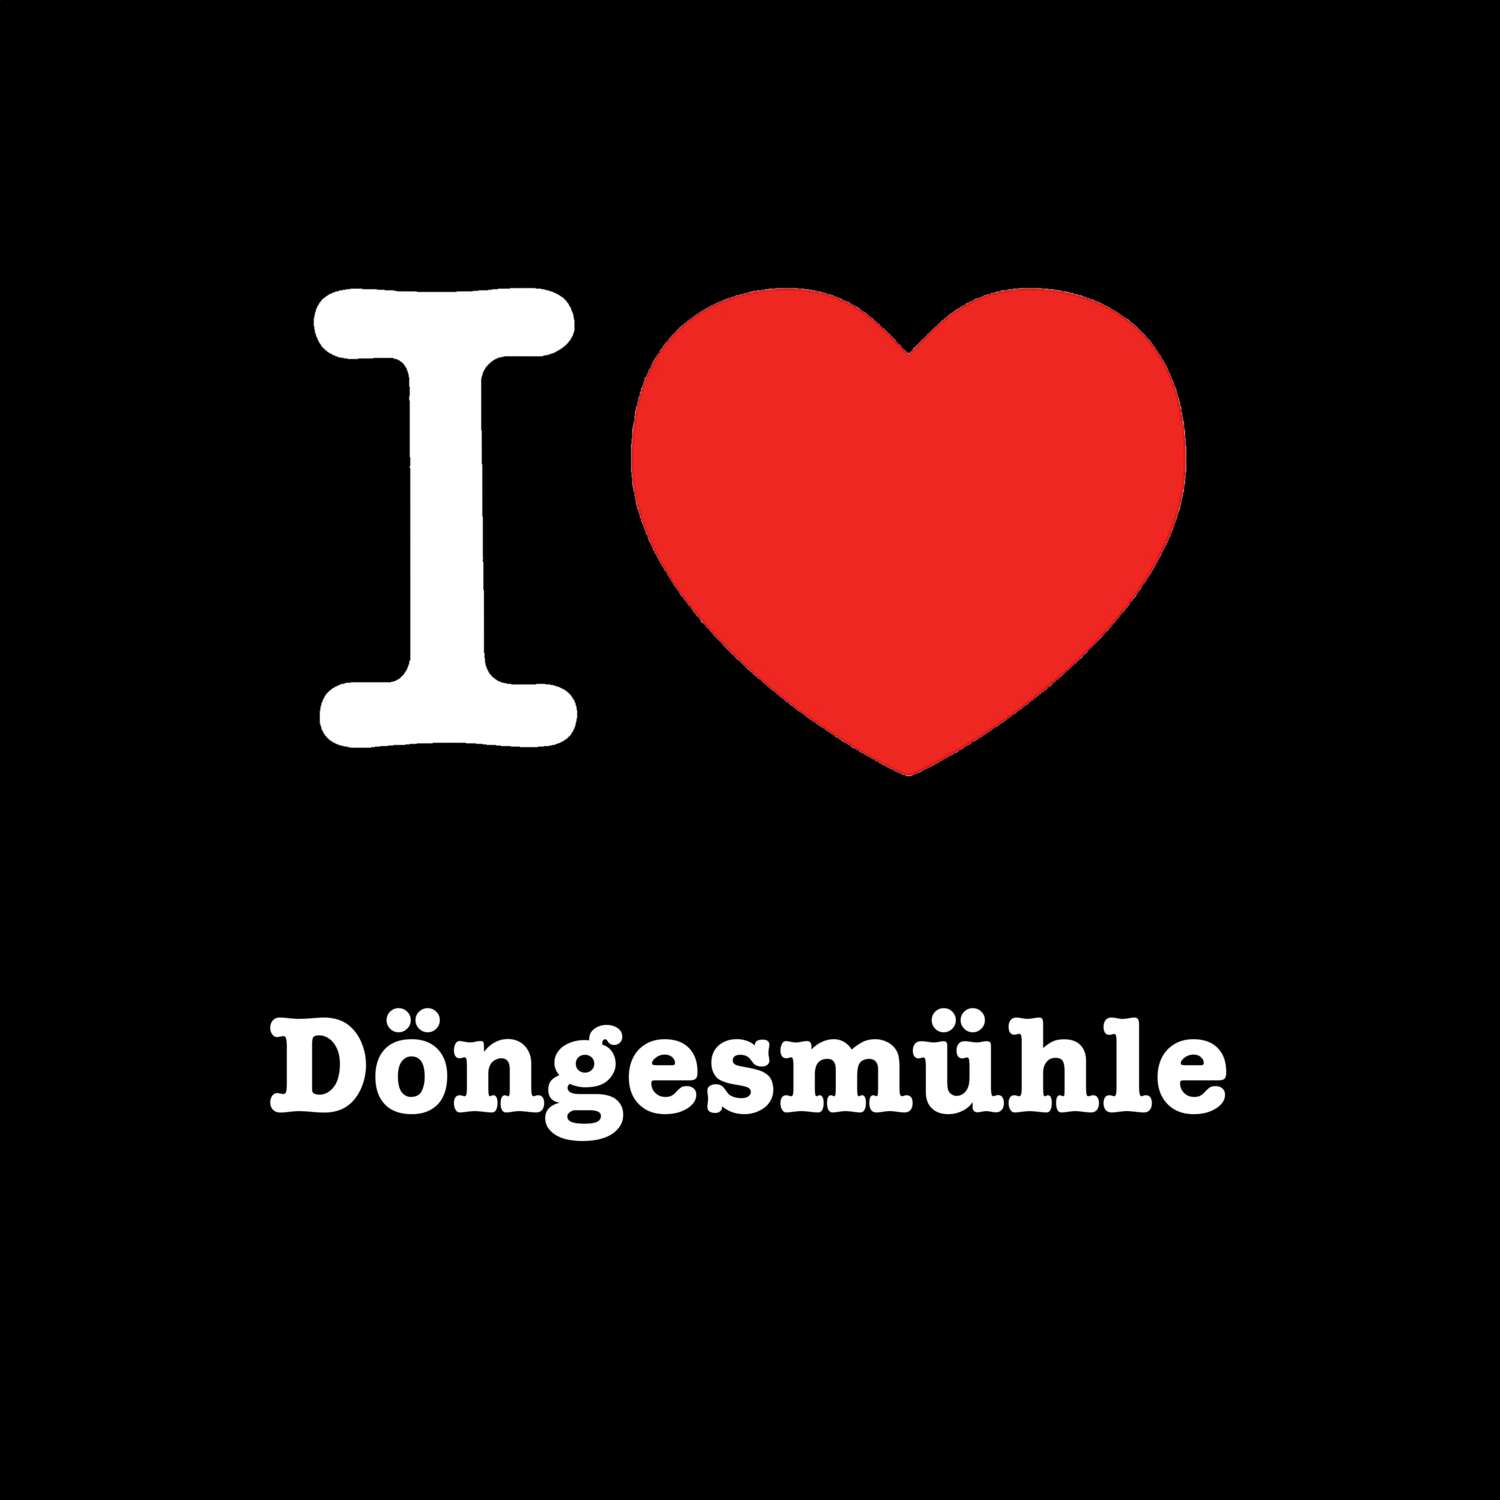 Döngesmühle T-Shirt »I love«